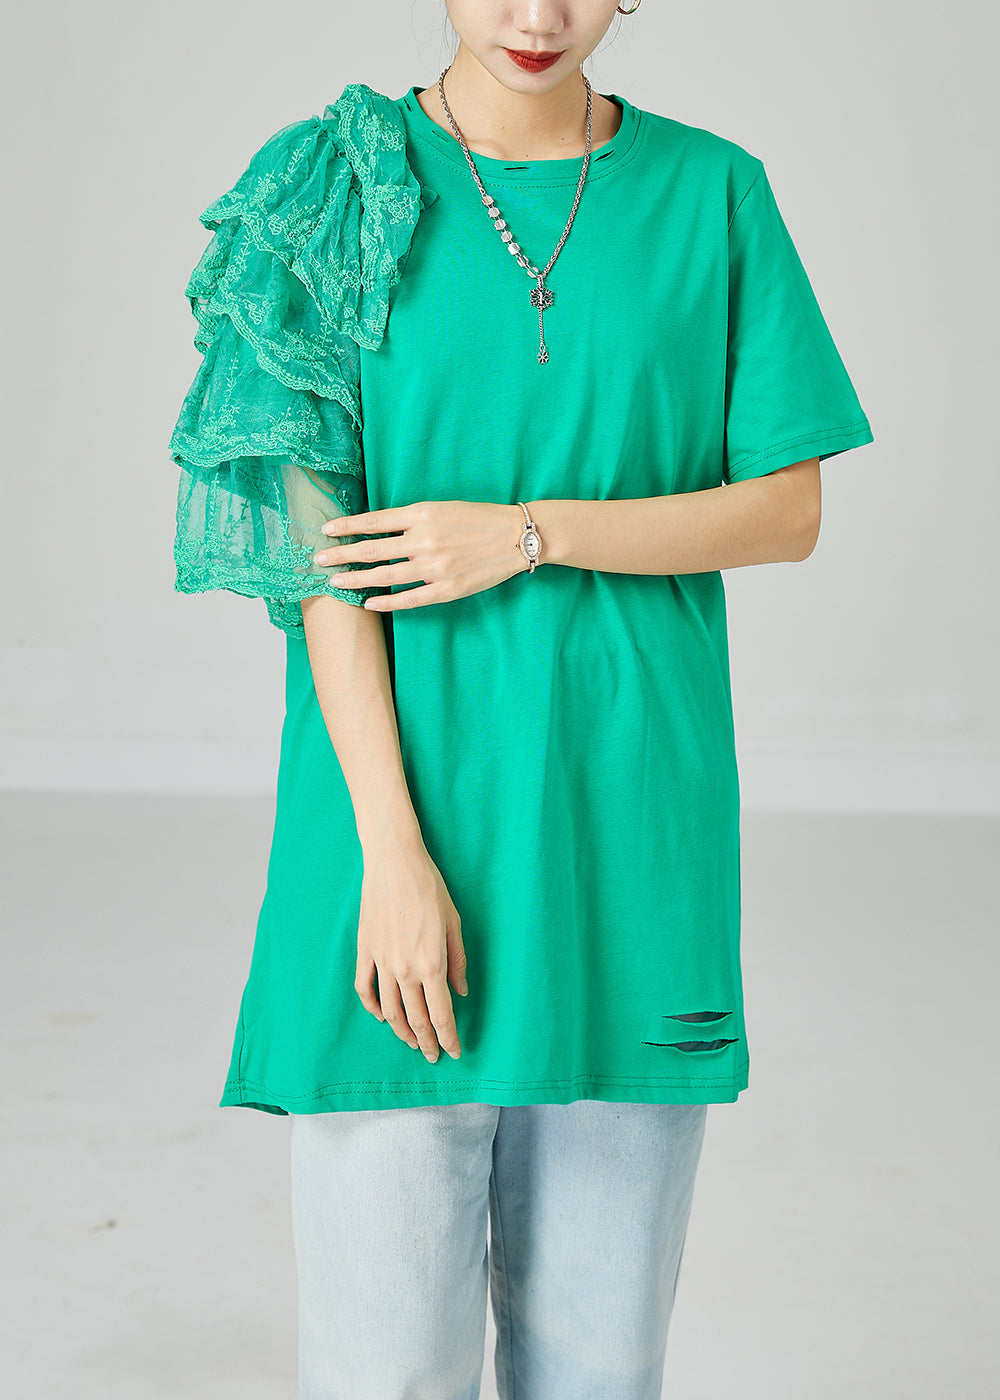 Art Green Asymmetrical Patchwork Cotton Ripped Long Tops Summer LY2455 - fabuloryshop